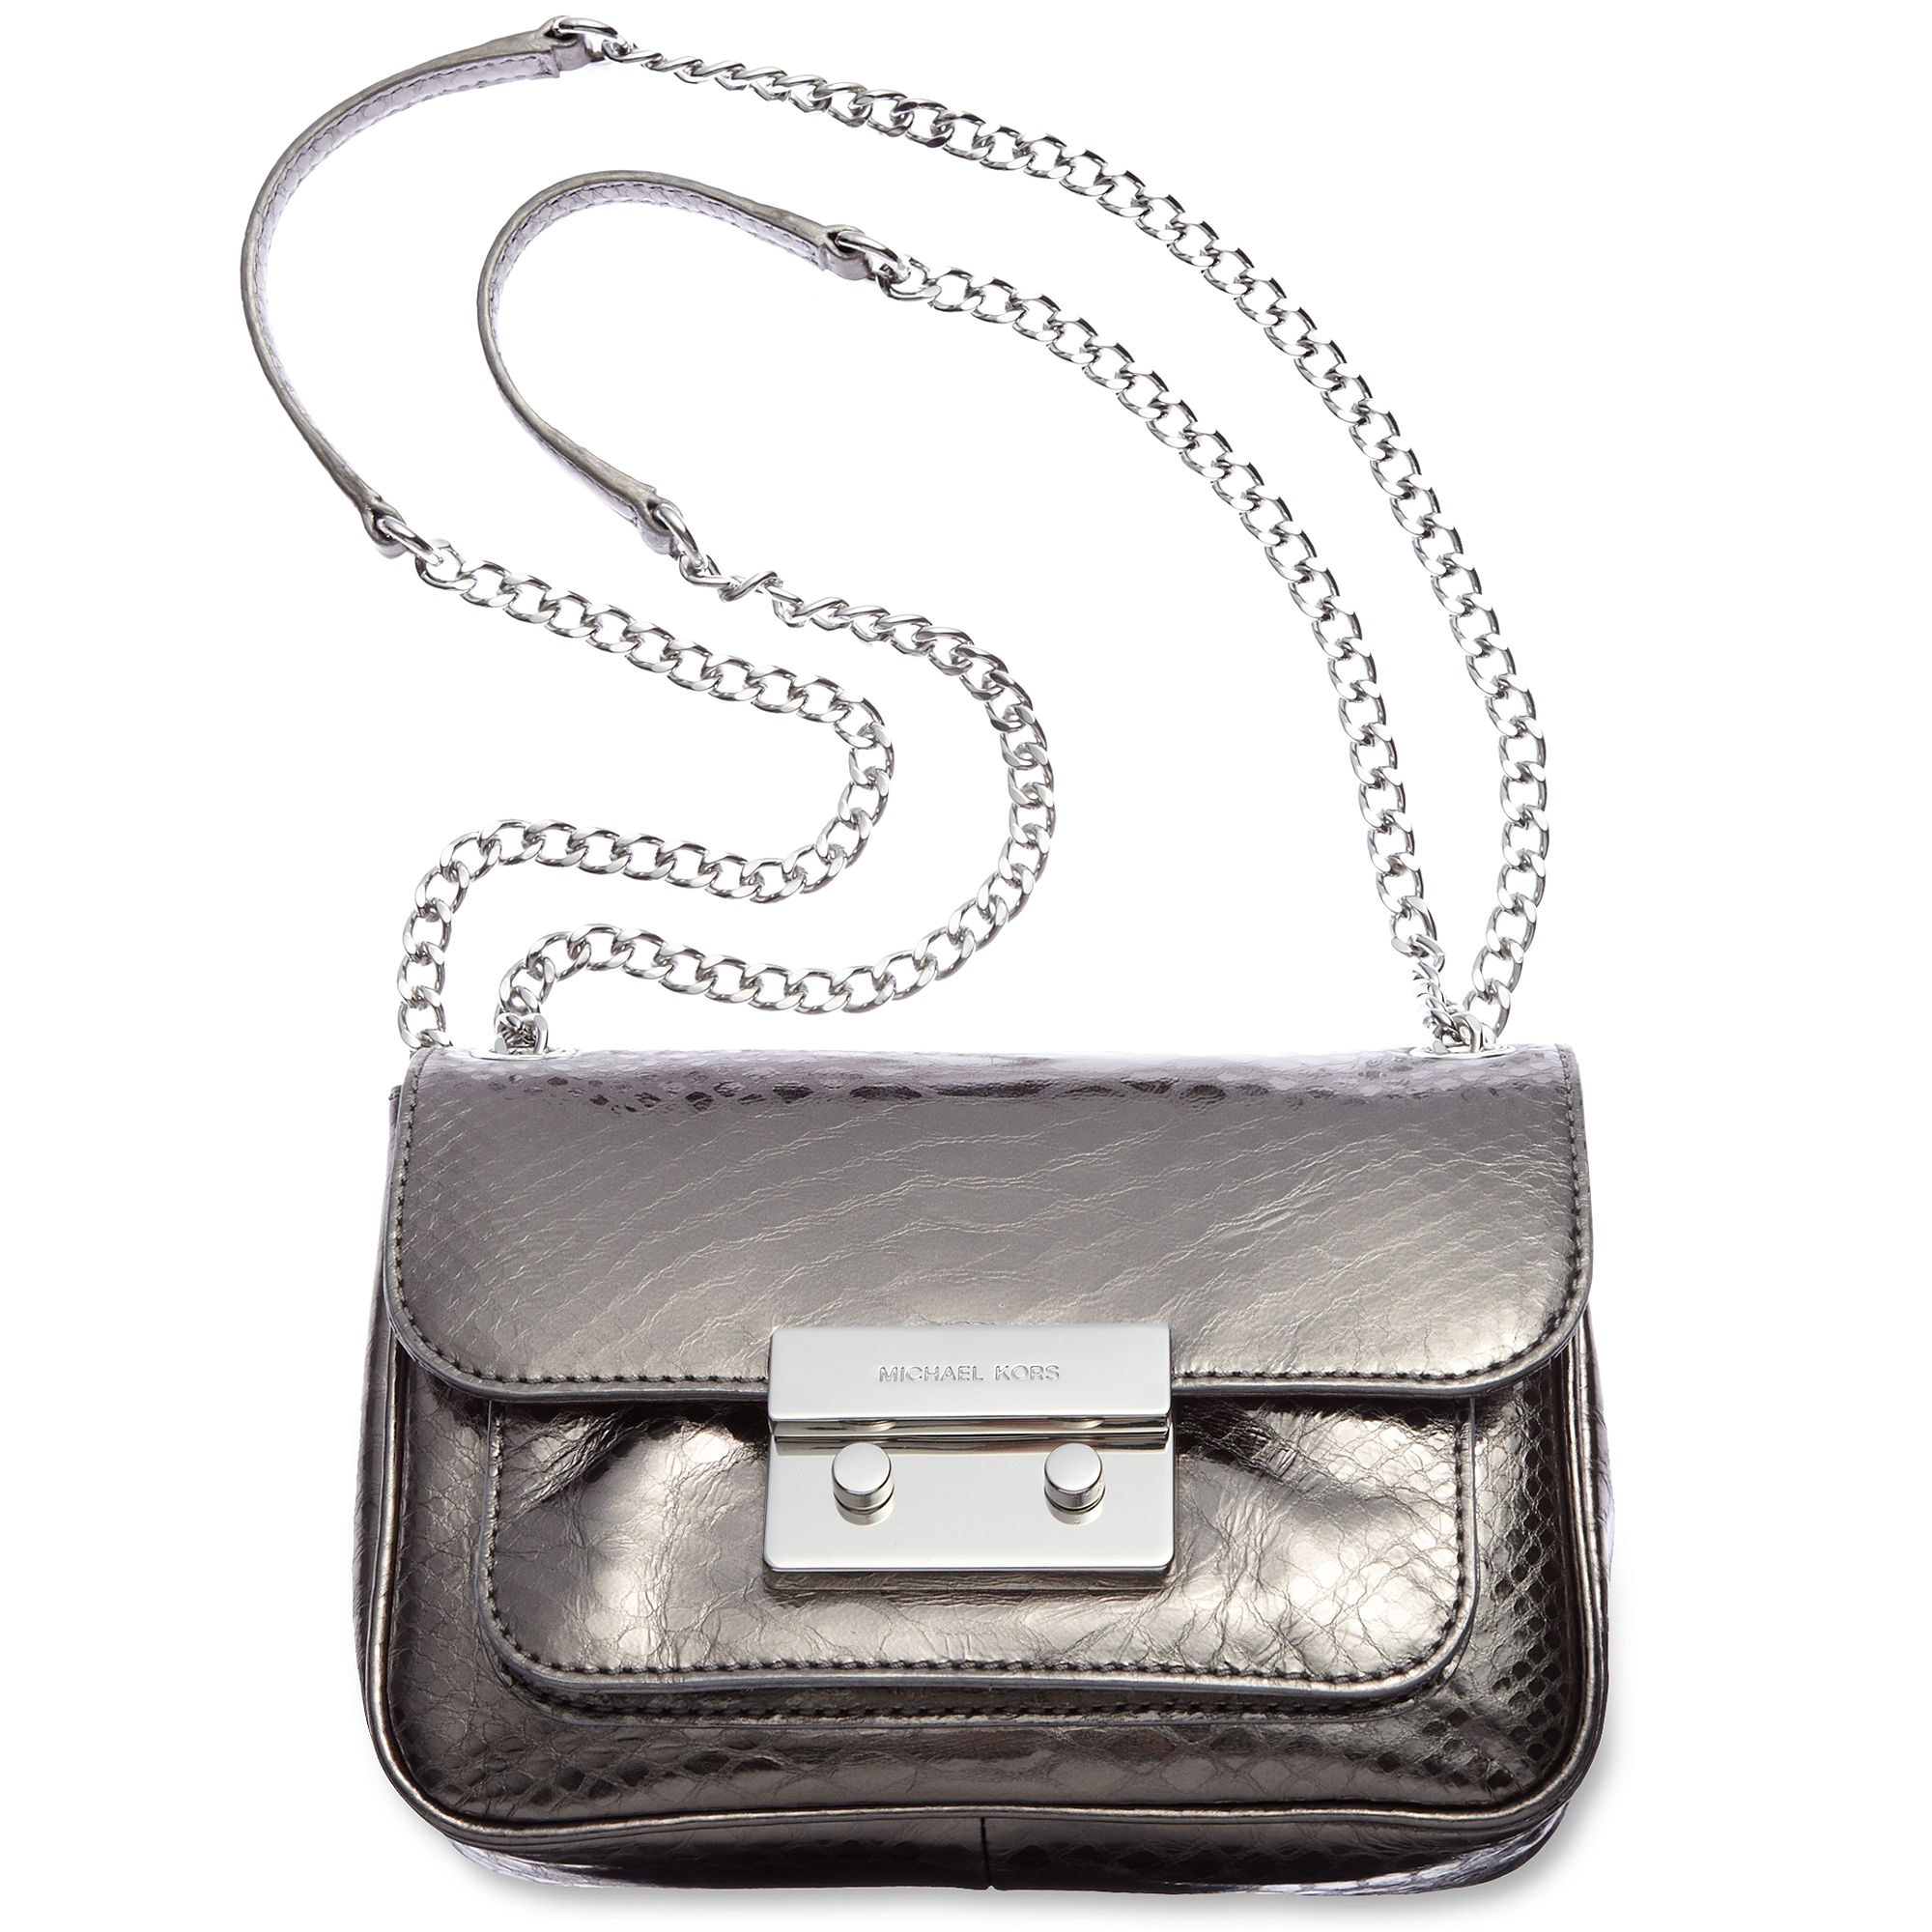 Michael Kors Sloan Small Shoulder Bag in Silver (gunmetal) | Lyst